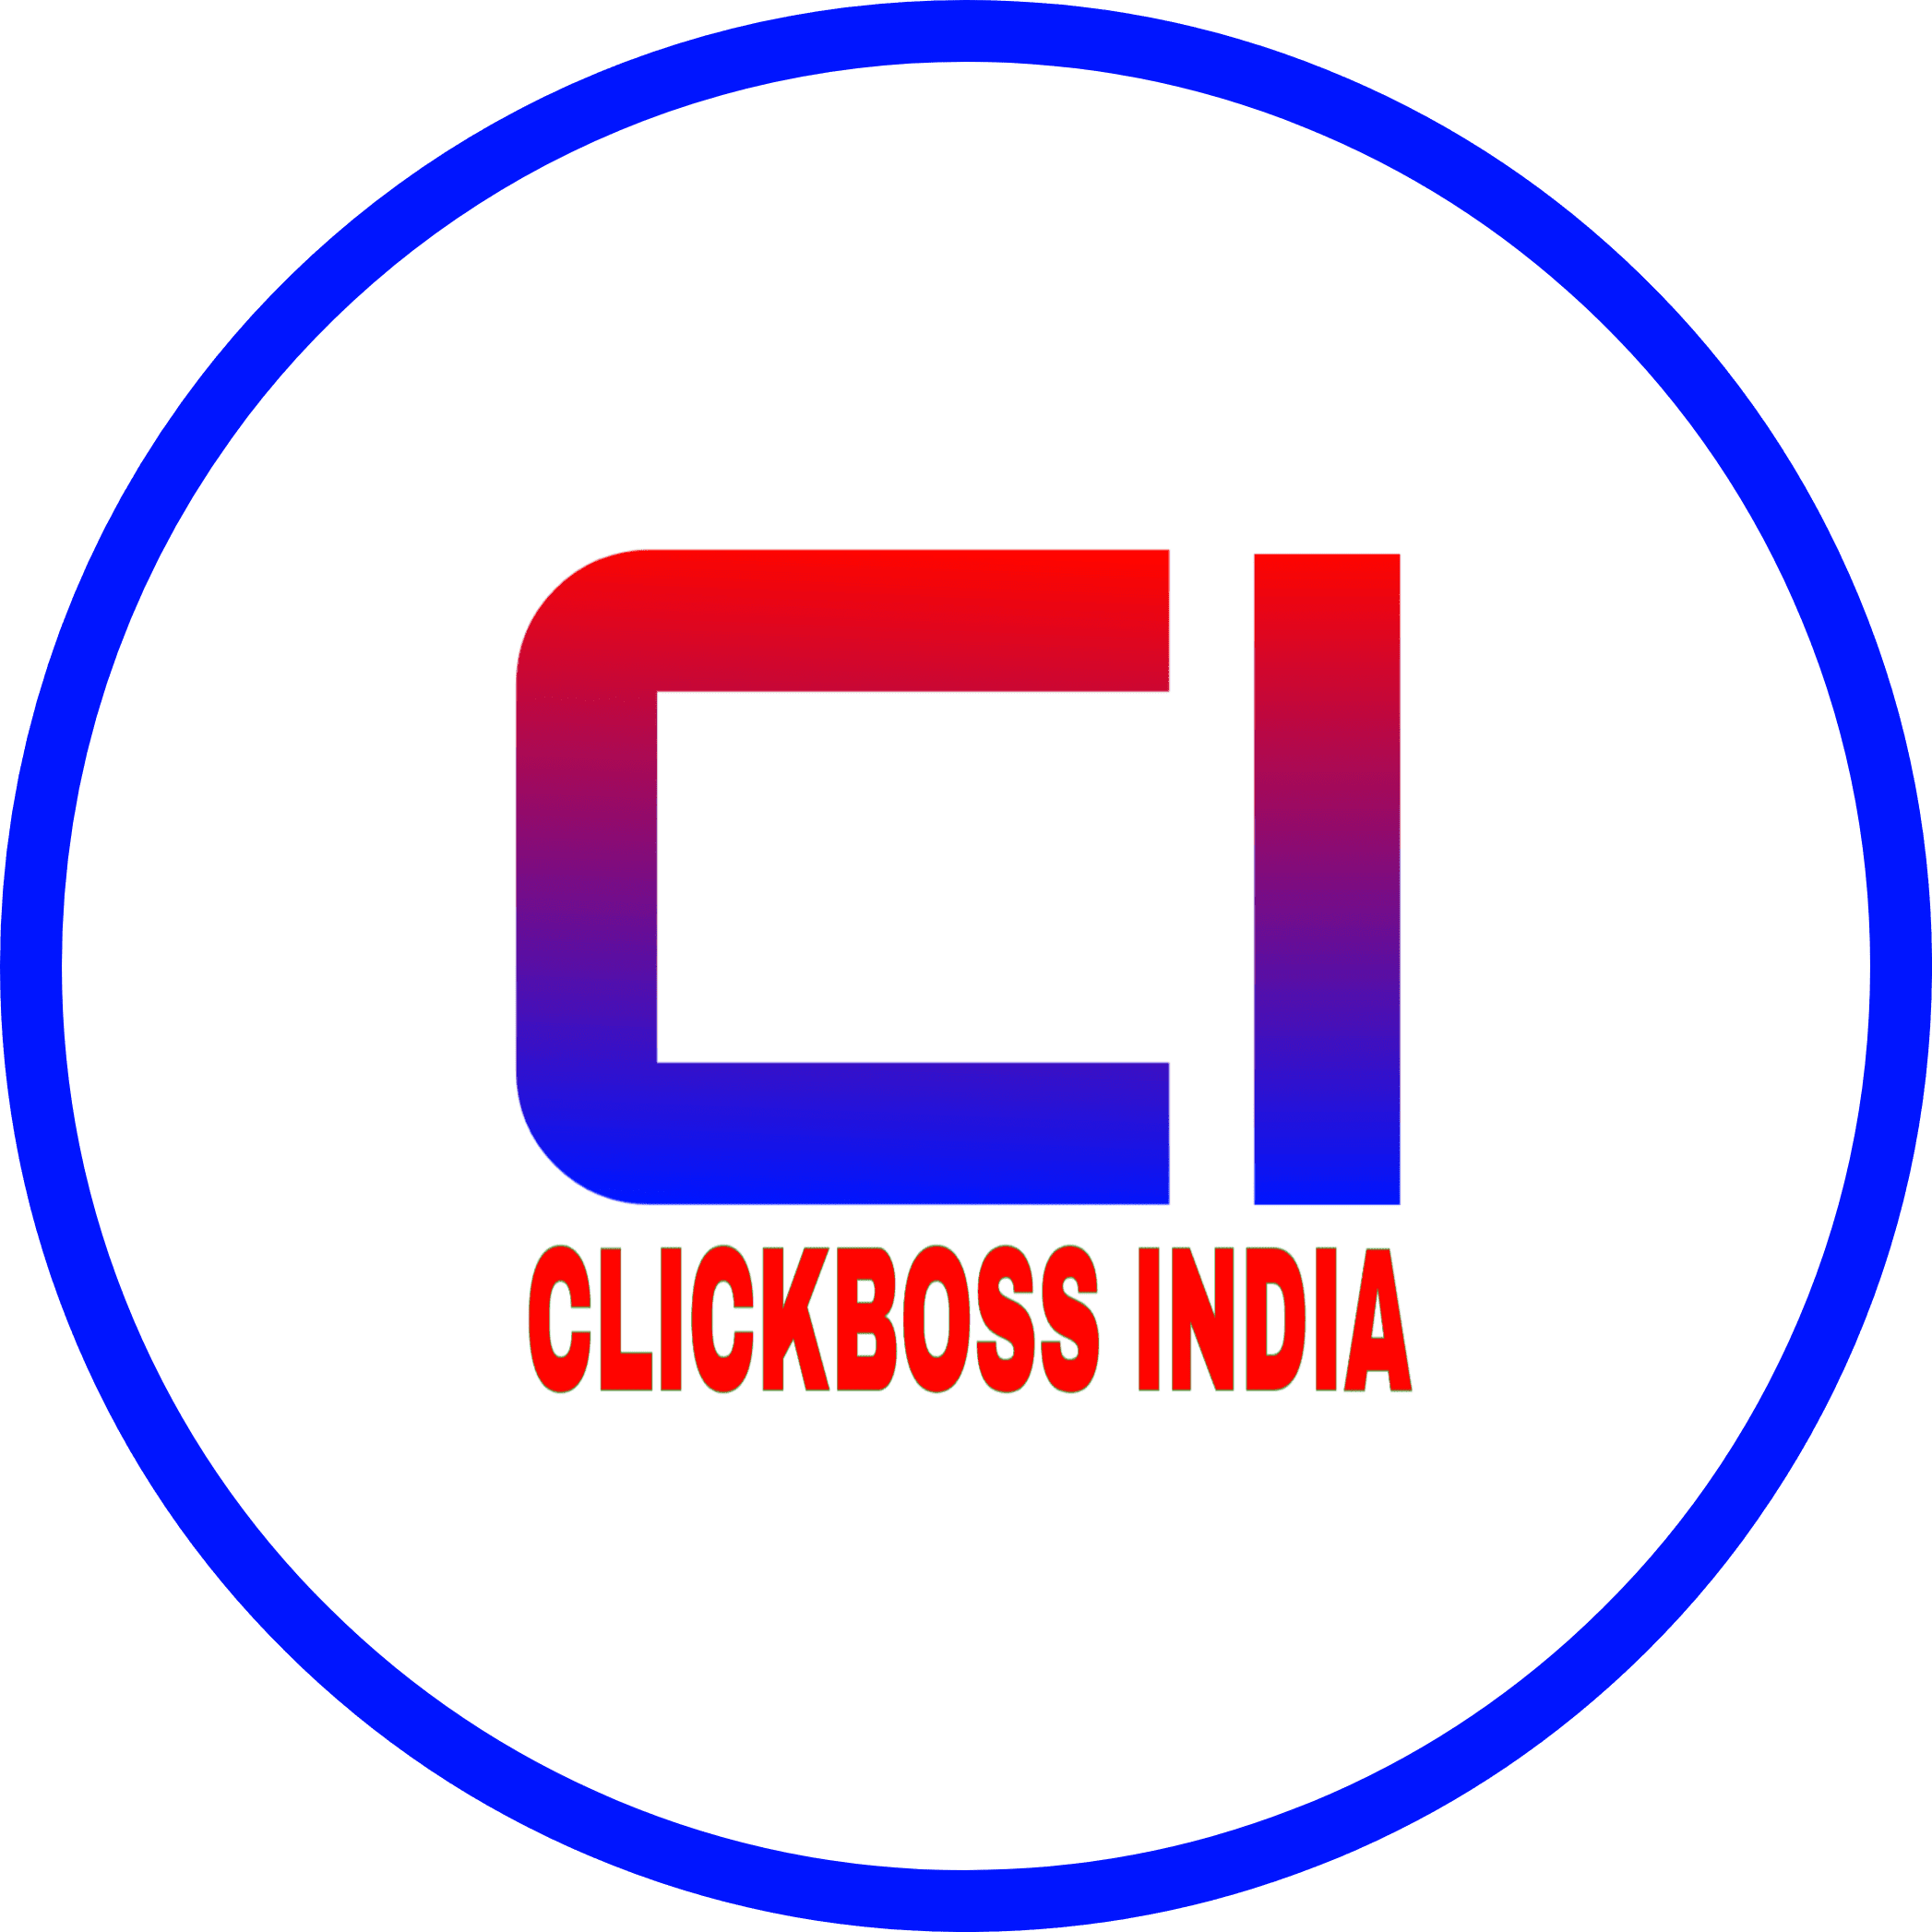 Clickboss India